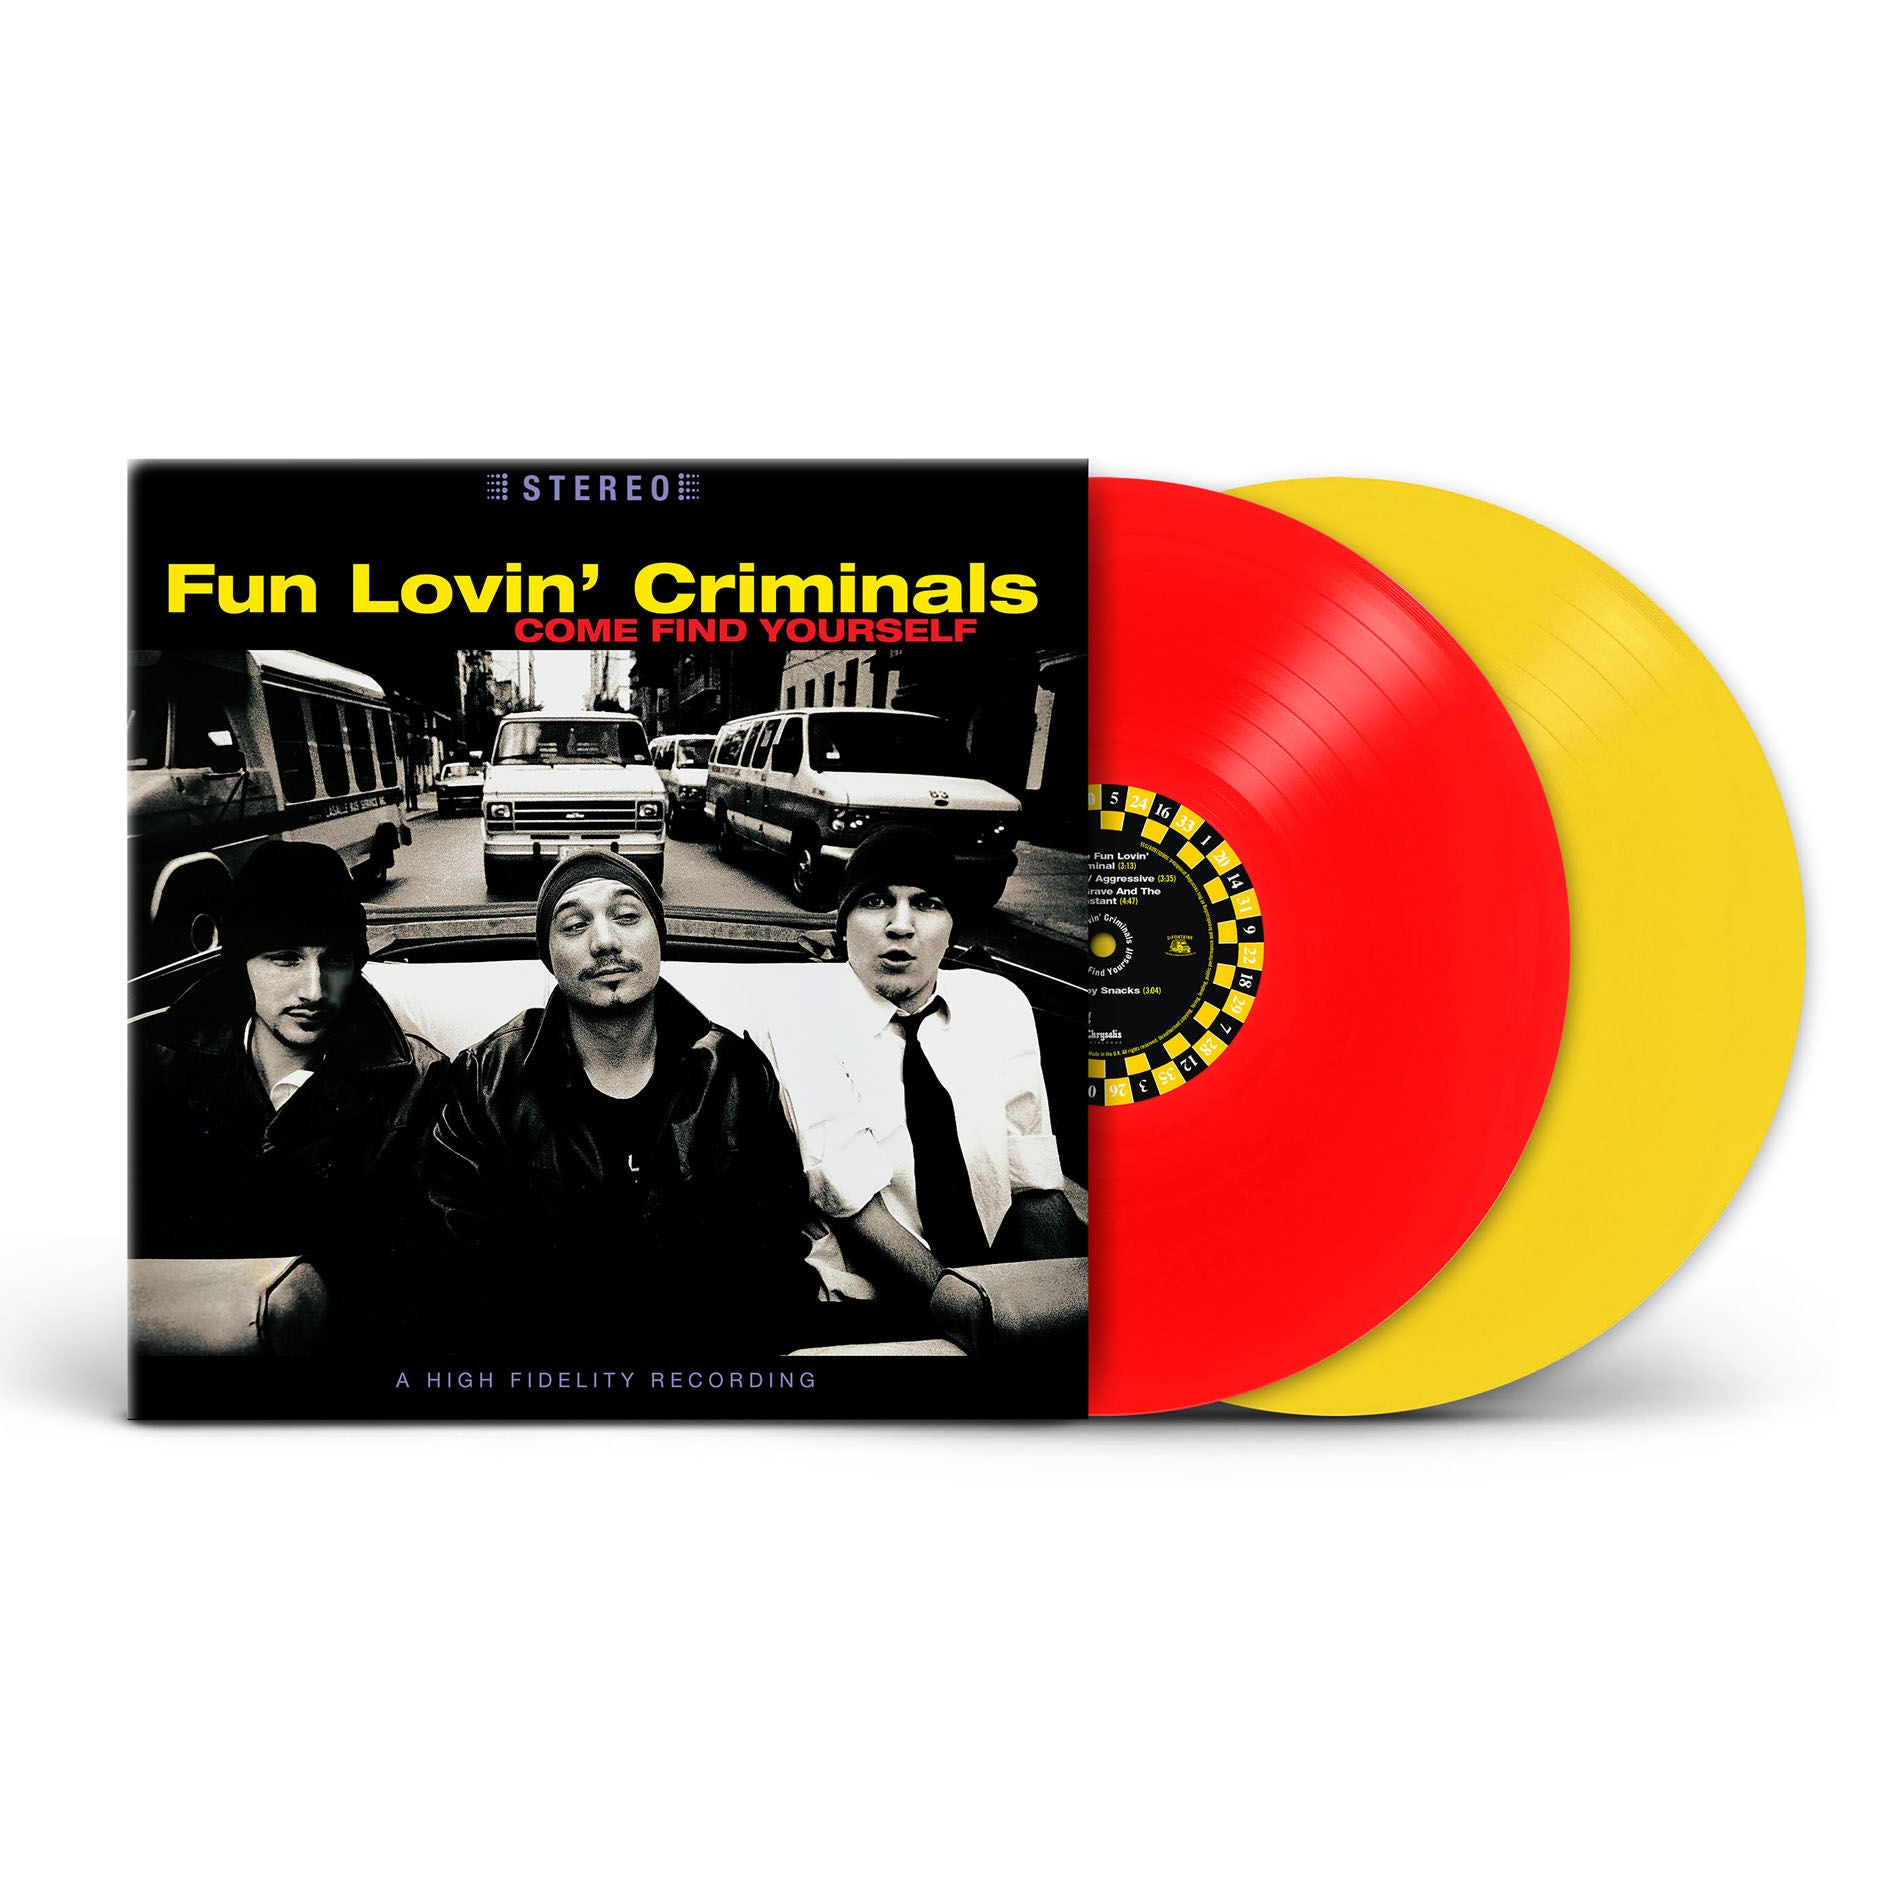 Fun Lovin' Criminals - Come Find Yourself (Ltd. Ed. 180G Red/Yellow 2XLP) - Blind Tiger Record Club